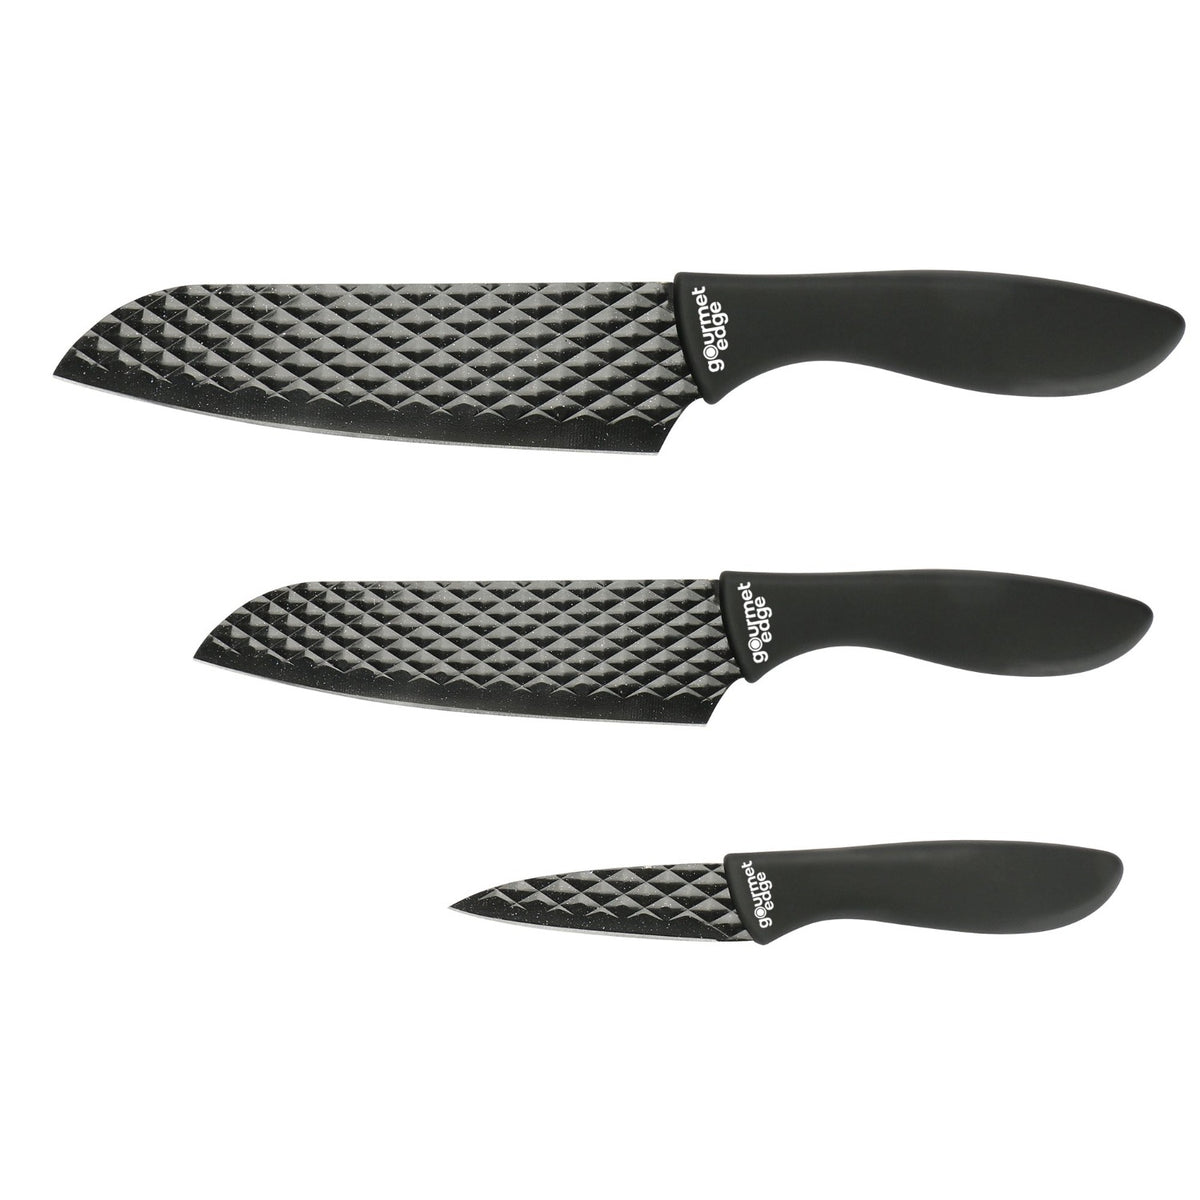 Gourmet Edge - 6pc Nutri-Blade Knife Set #70-5008